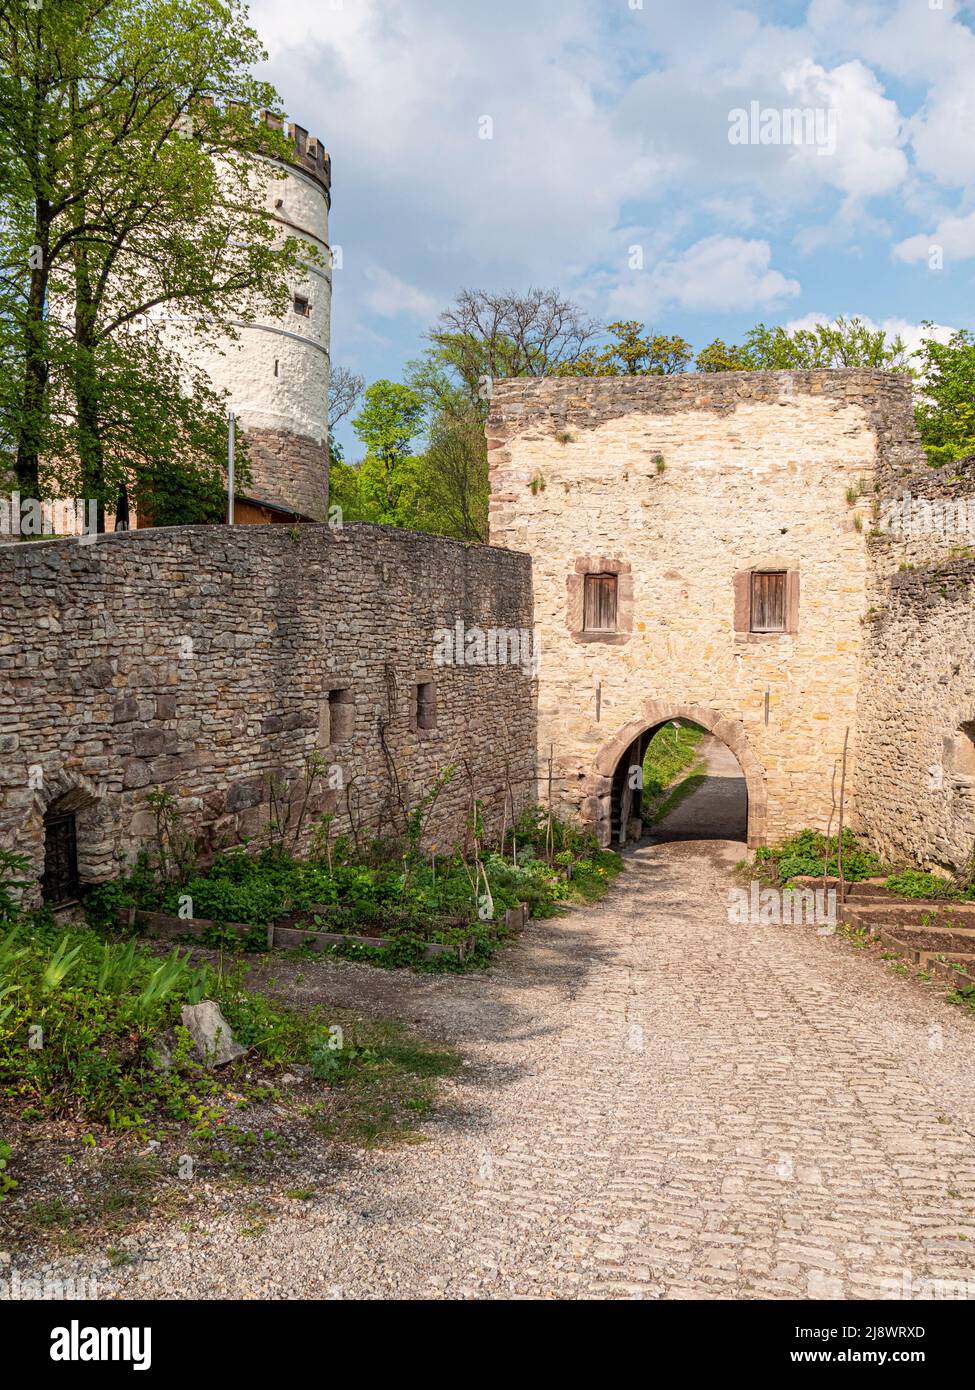 Gatehouse of a medieval castle ruin, Plesse Burg, Goettingen, Germany Stock Photo